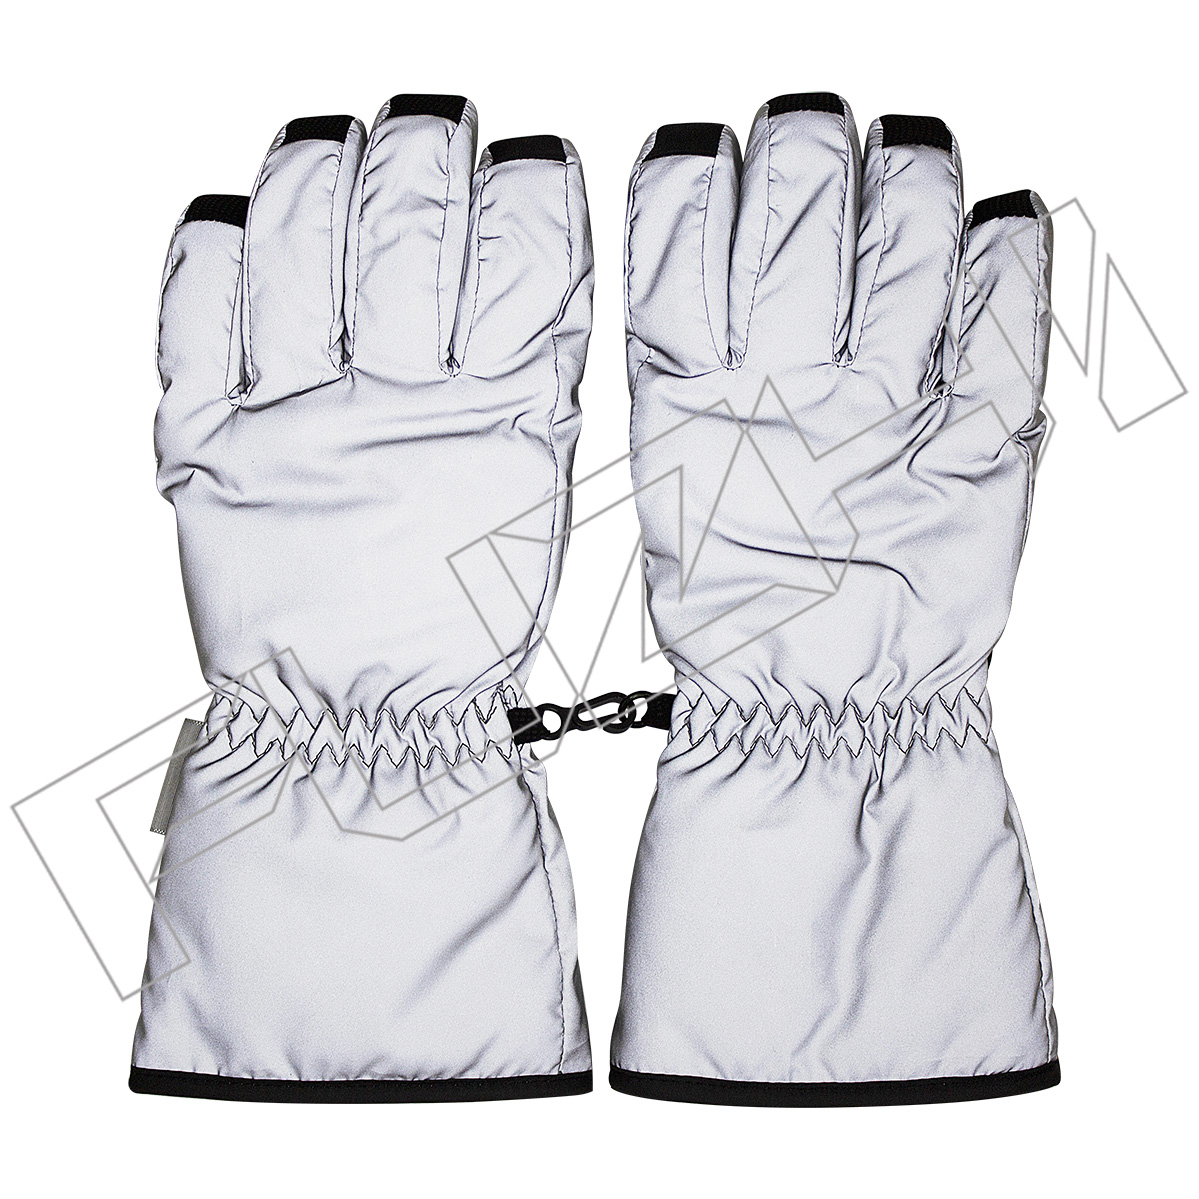 Reflective ski gloves